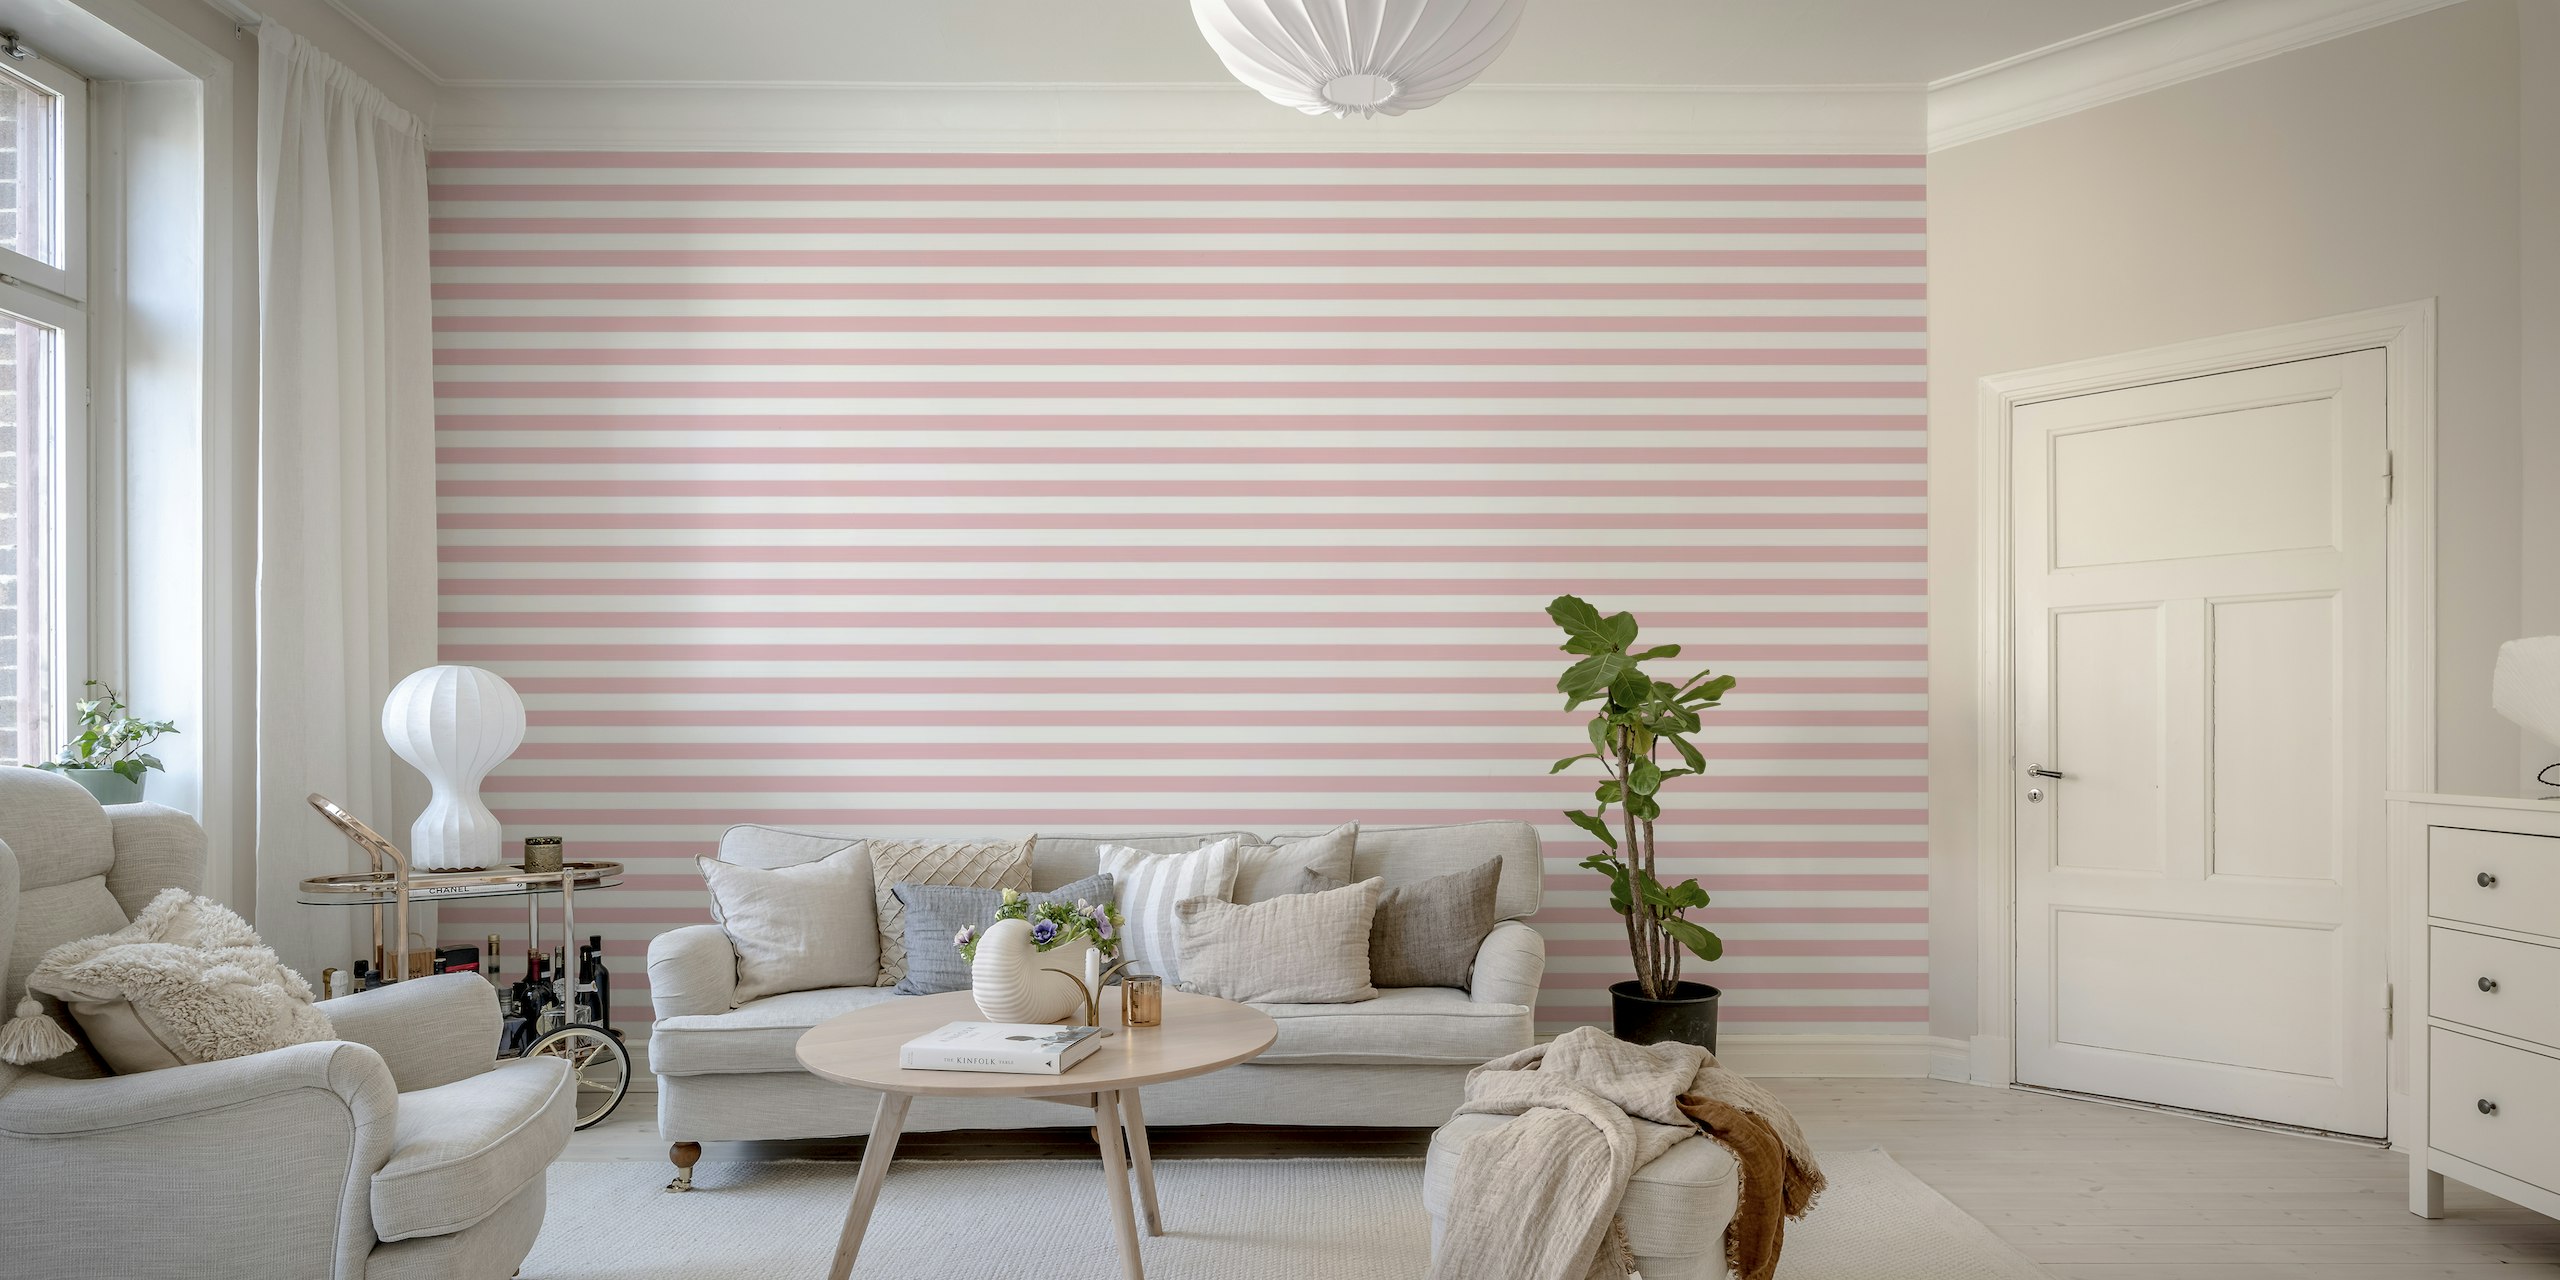 Pink horizontal stripes papel pintado